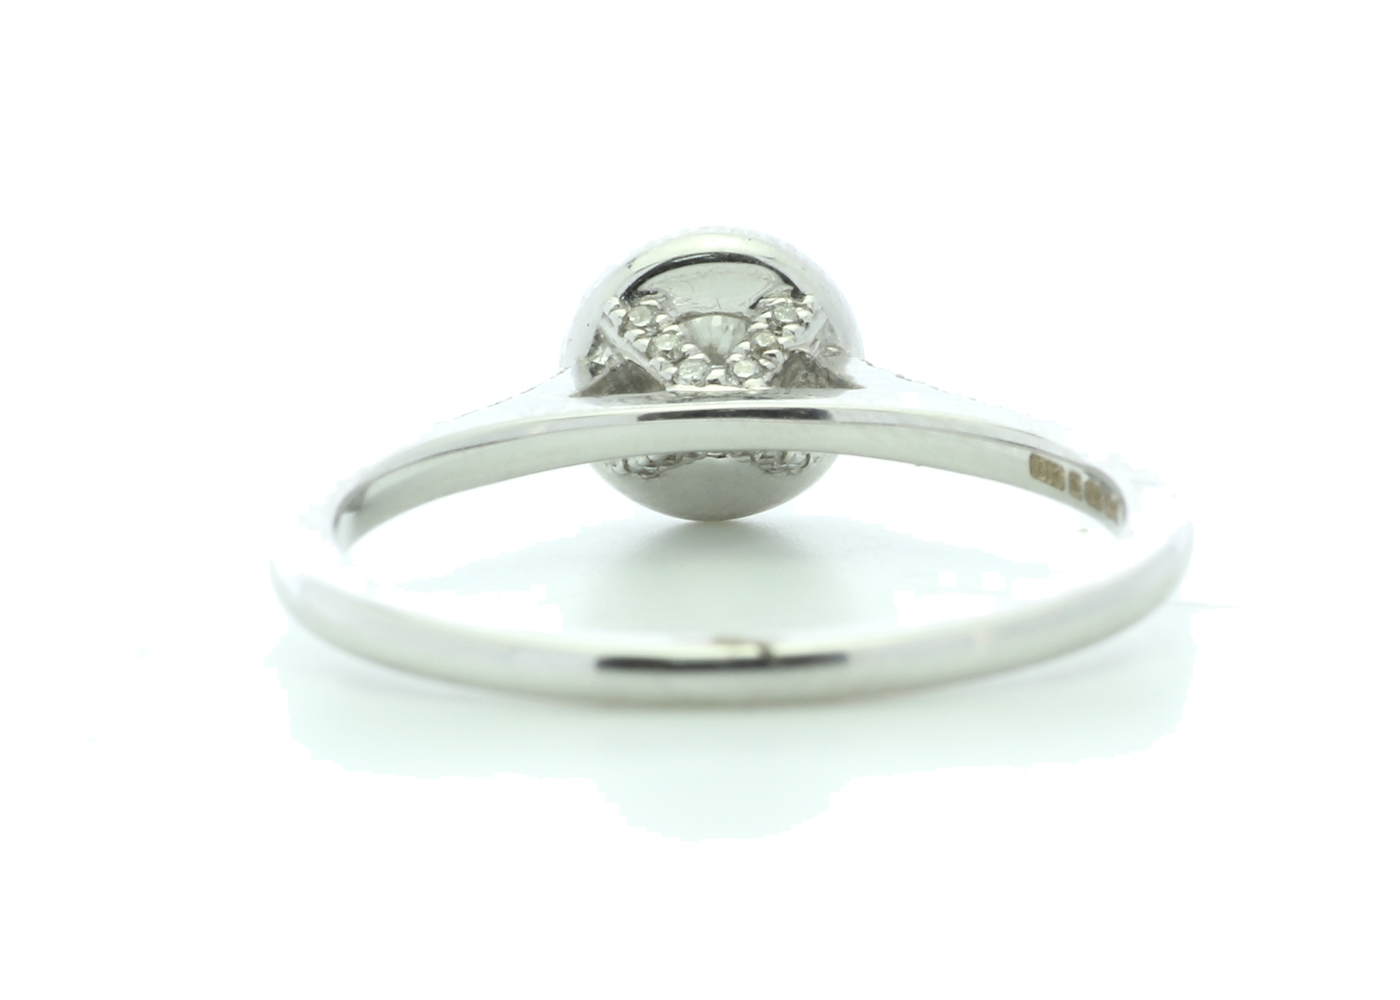 18ct White Gold Halo Set Diamond Ring 0.38 Carats - Image 3 of 5